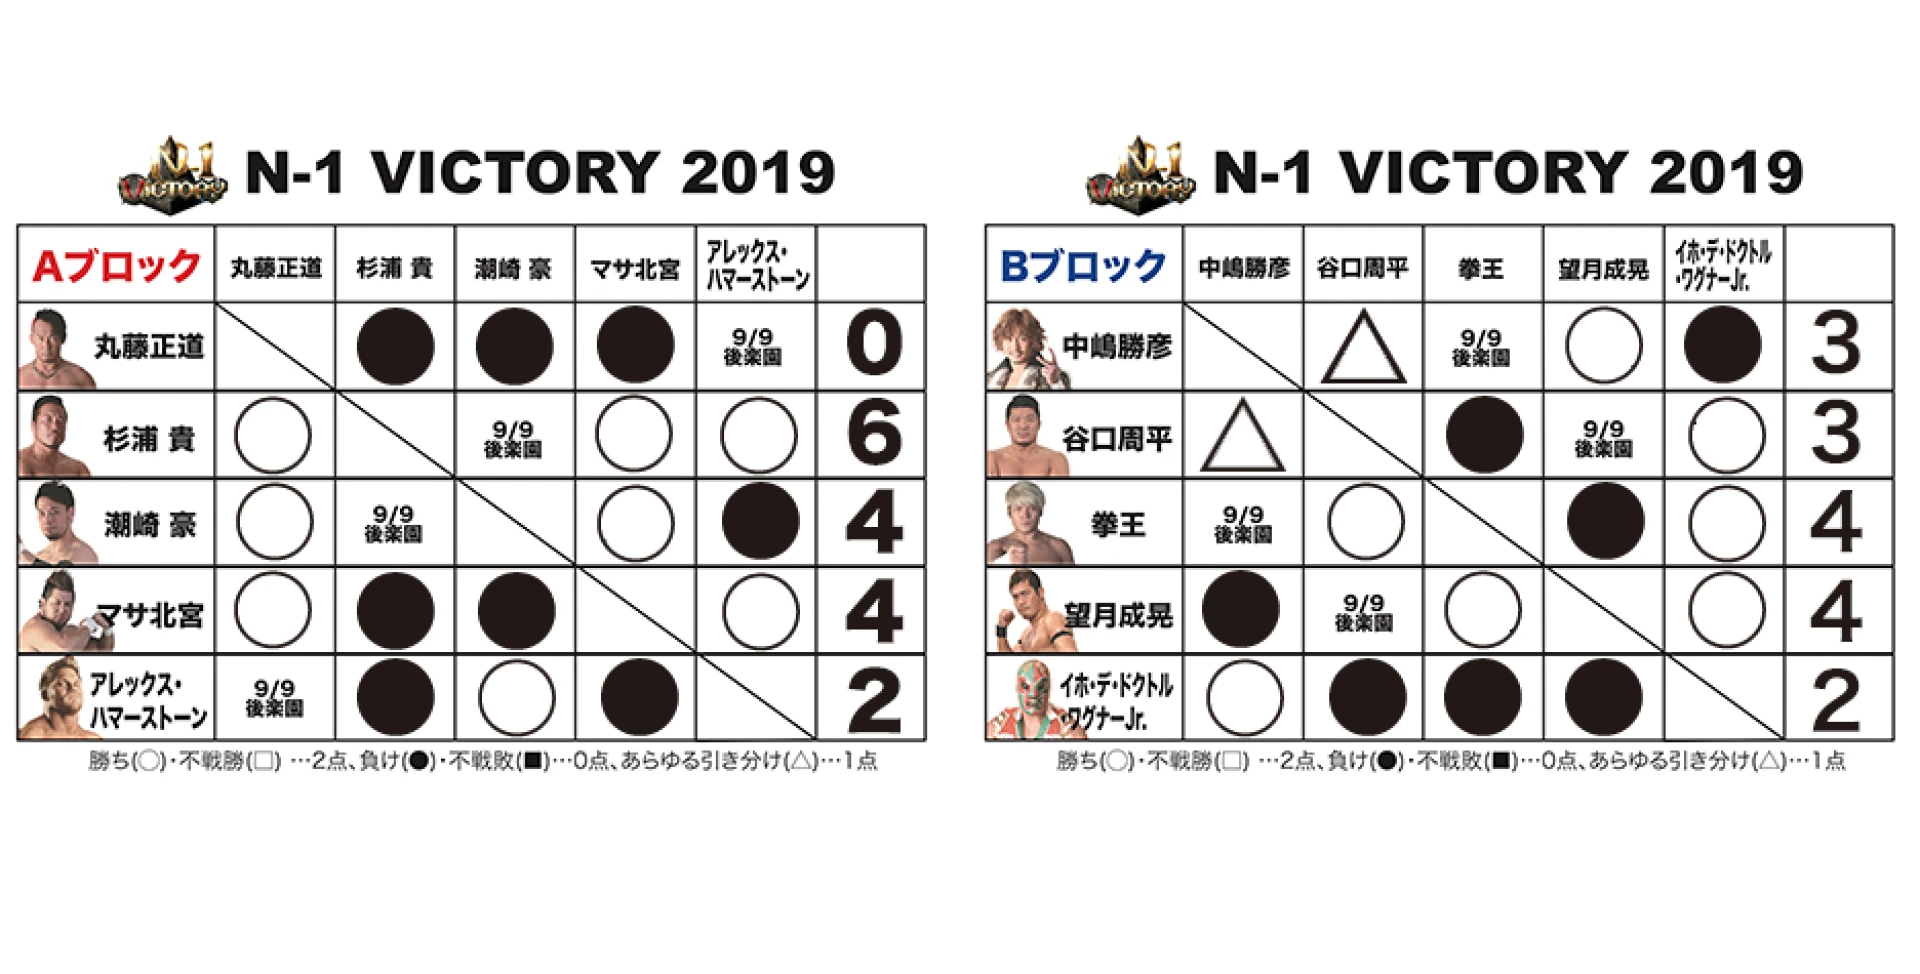 【9.8福島大会終了時の得点状況】『N-1 VICTORY 2019』得点表